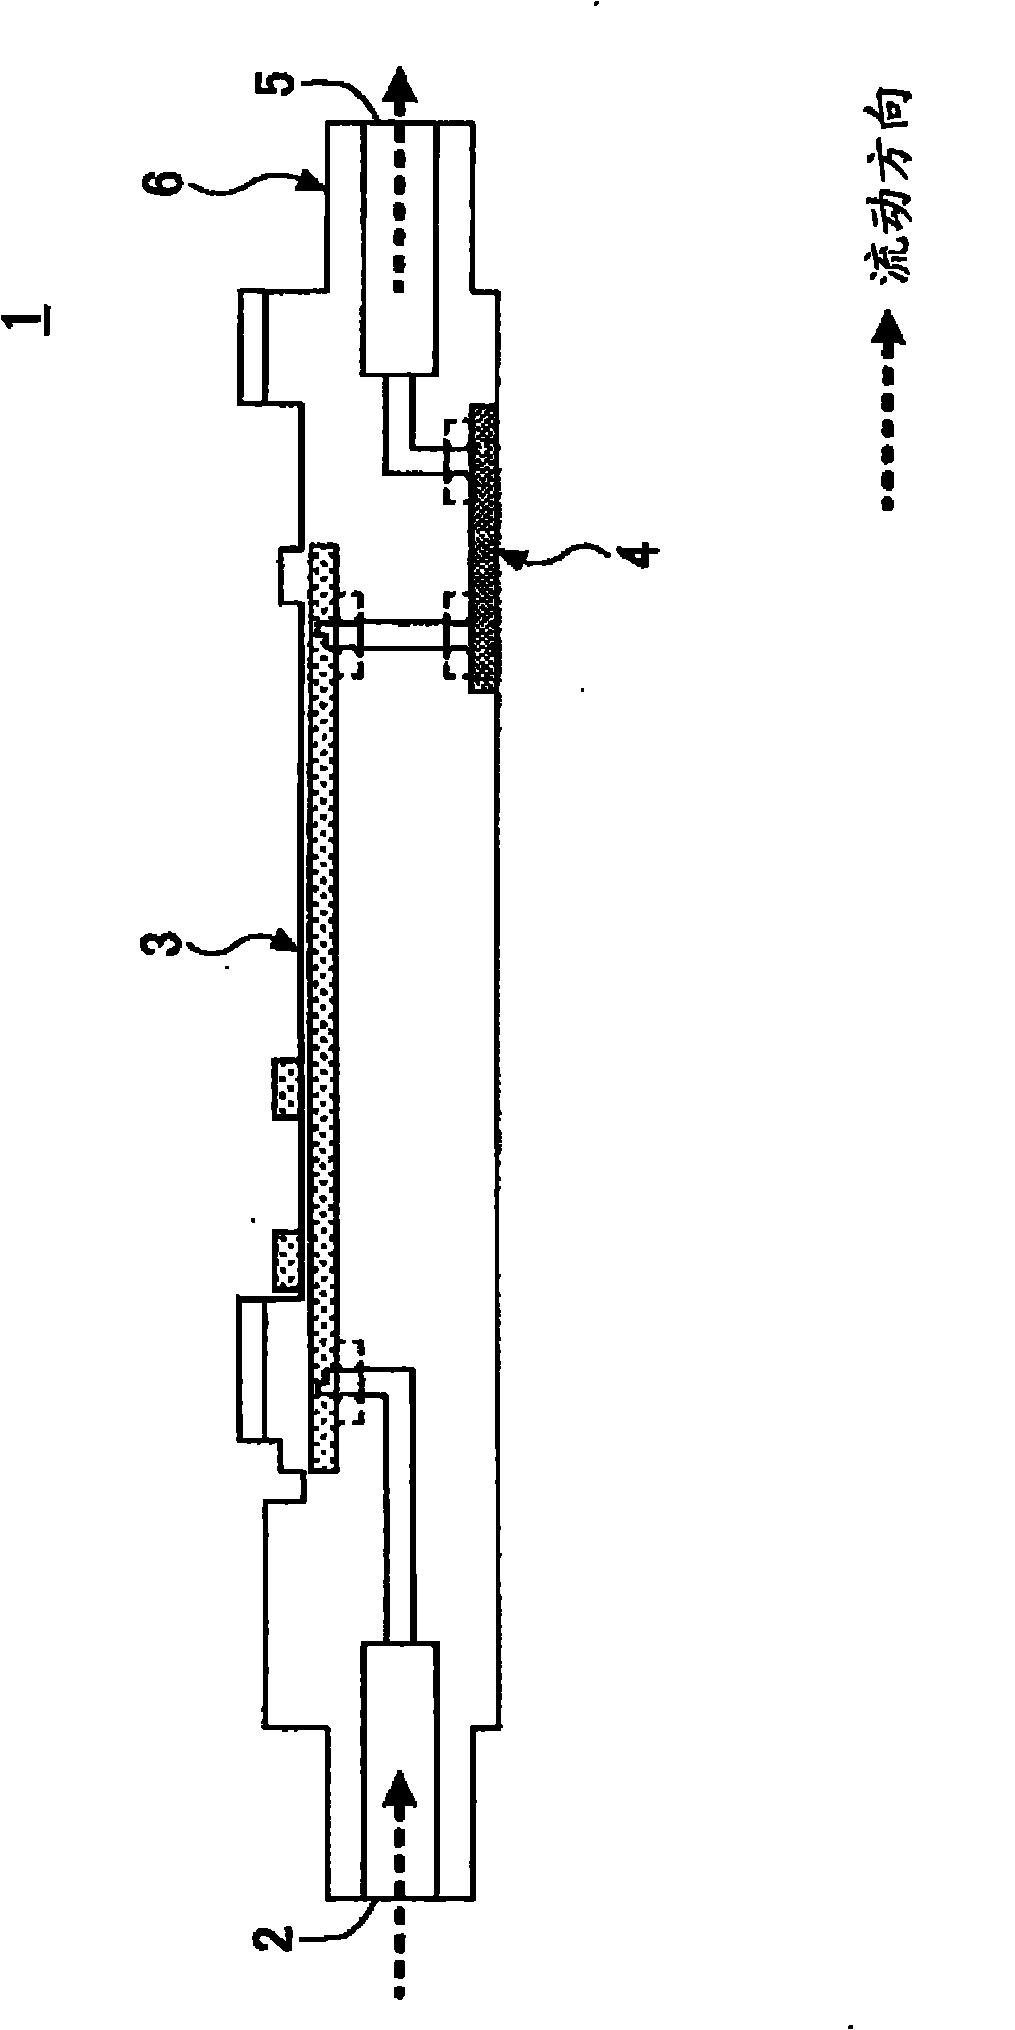 Infusion pump module